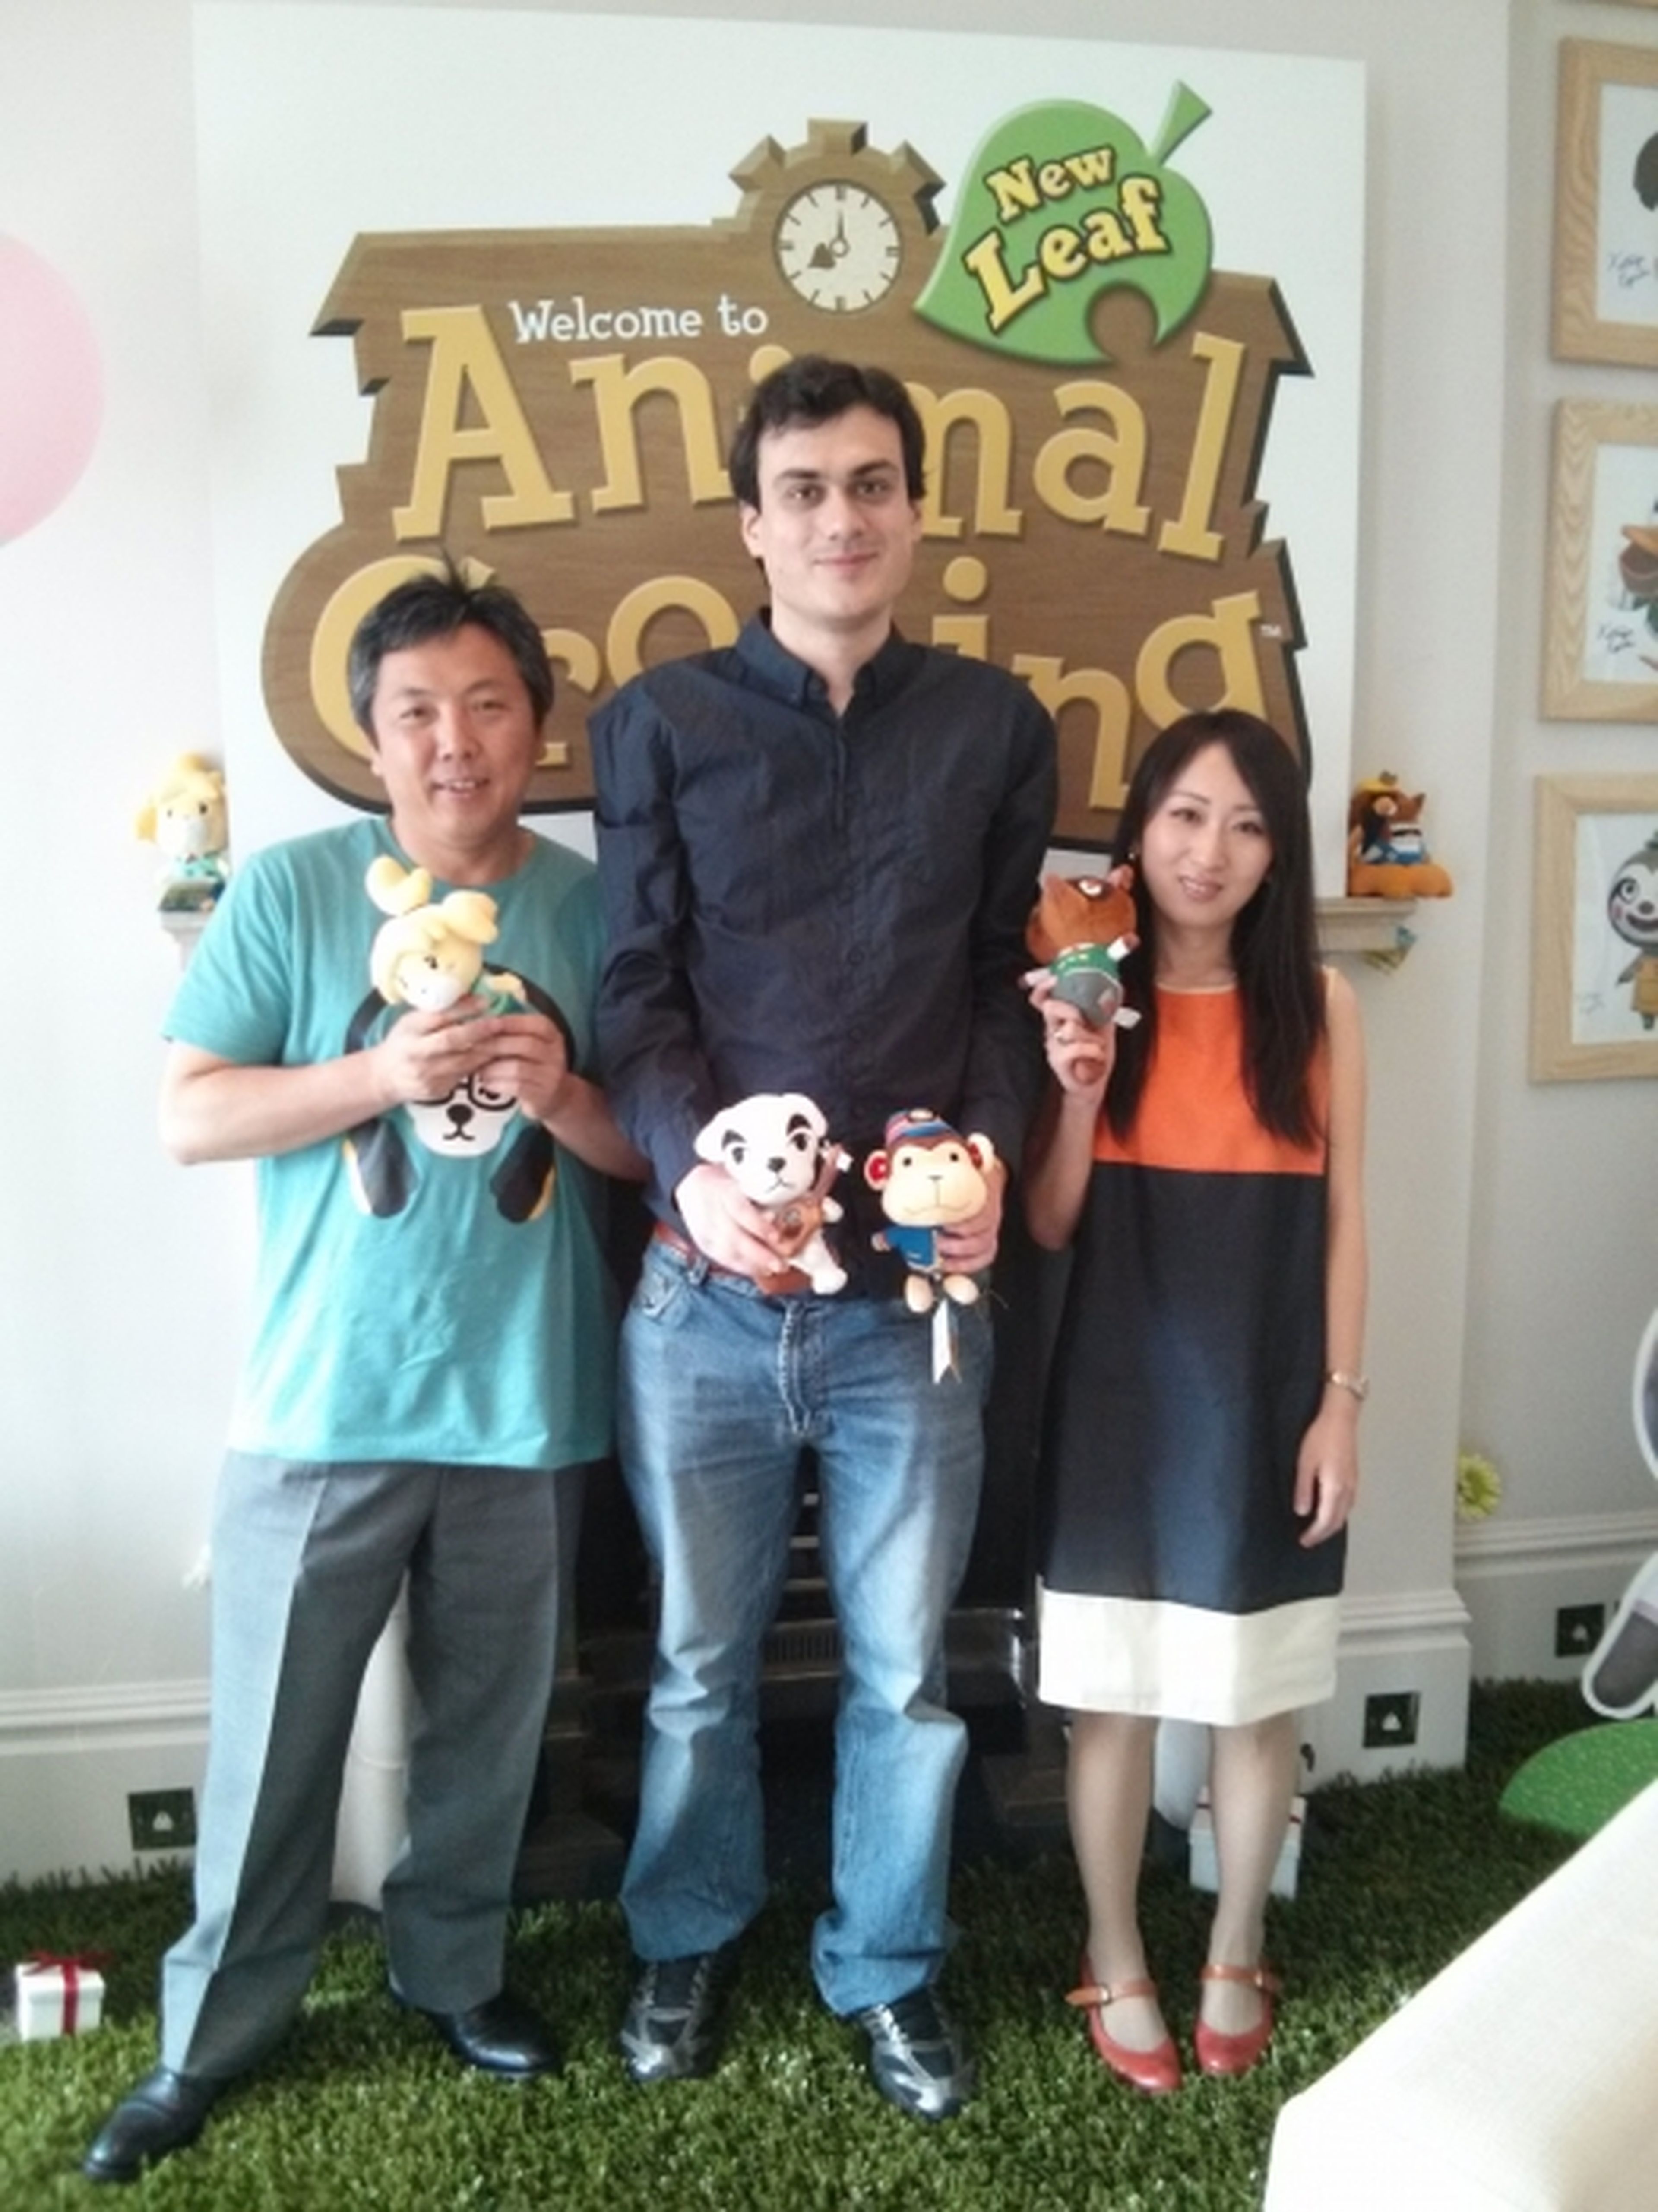 Entrevista: Animal Crossing New Leaf